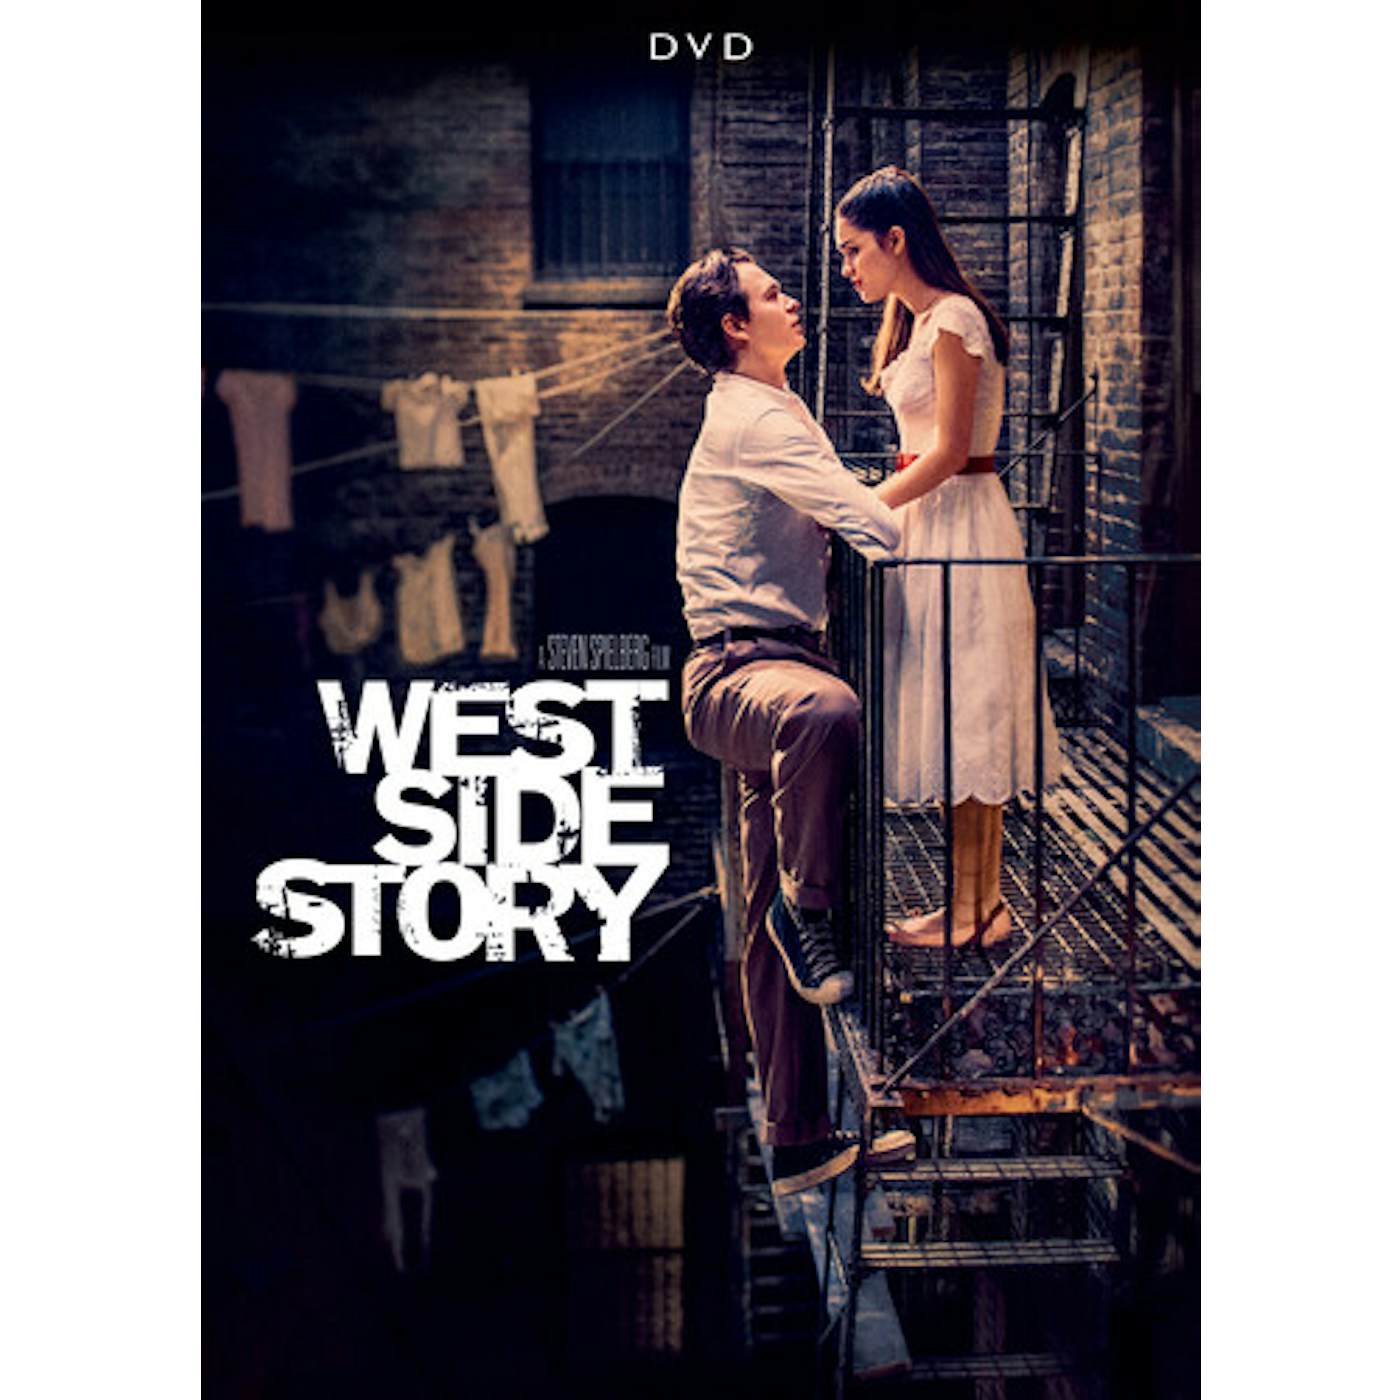 WEST SIDE STORY DVD